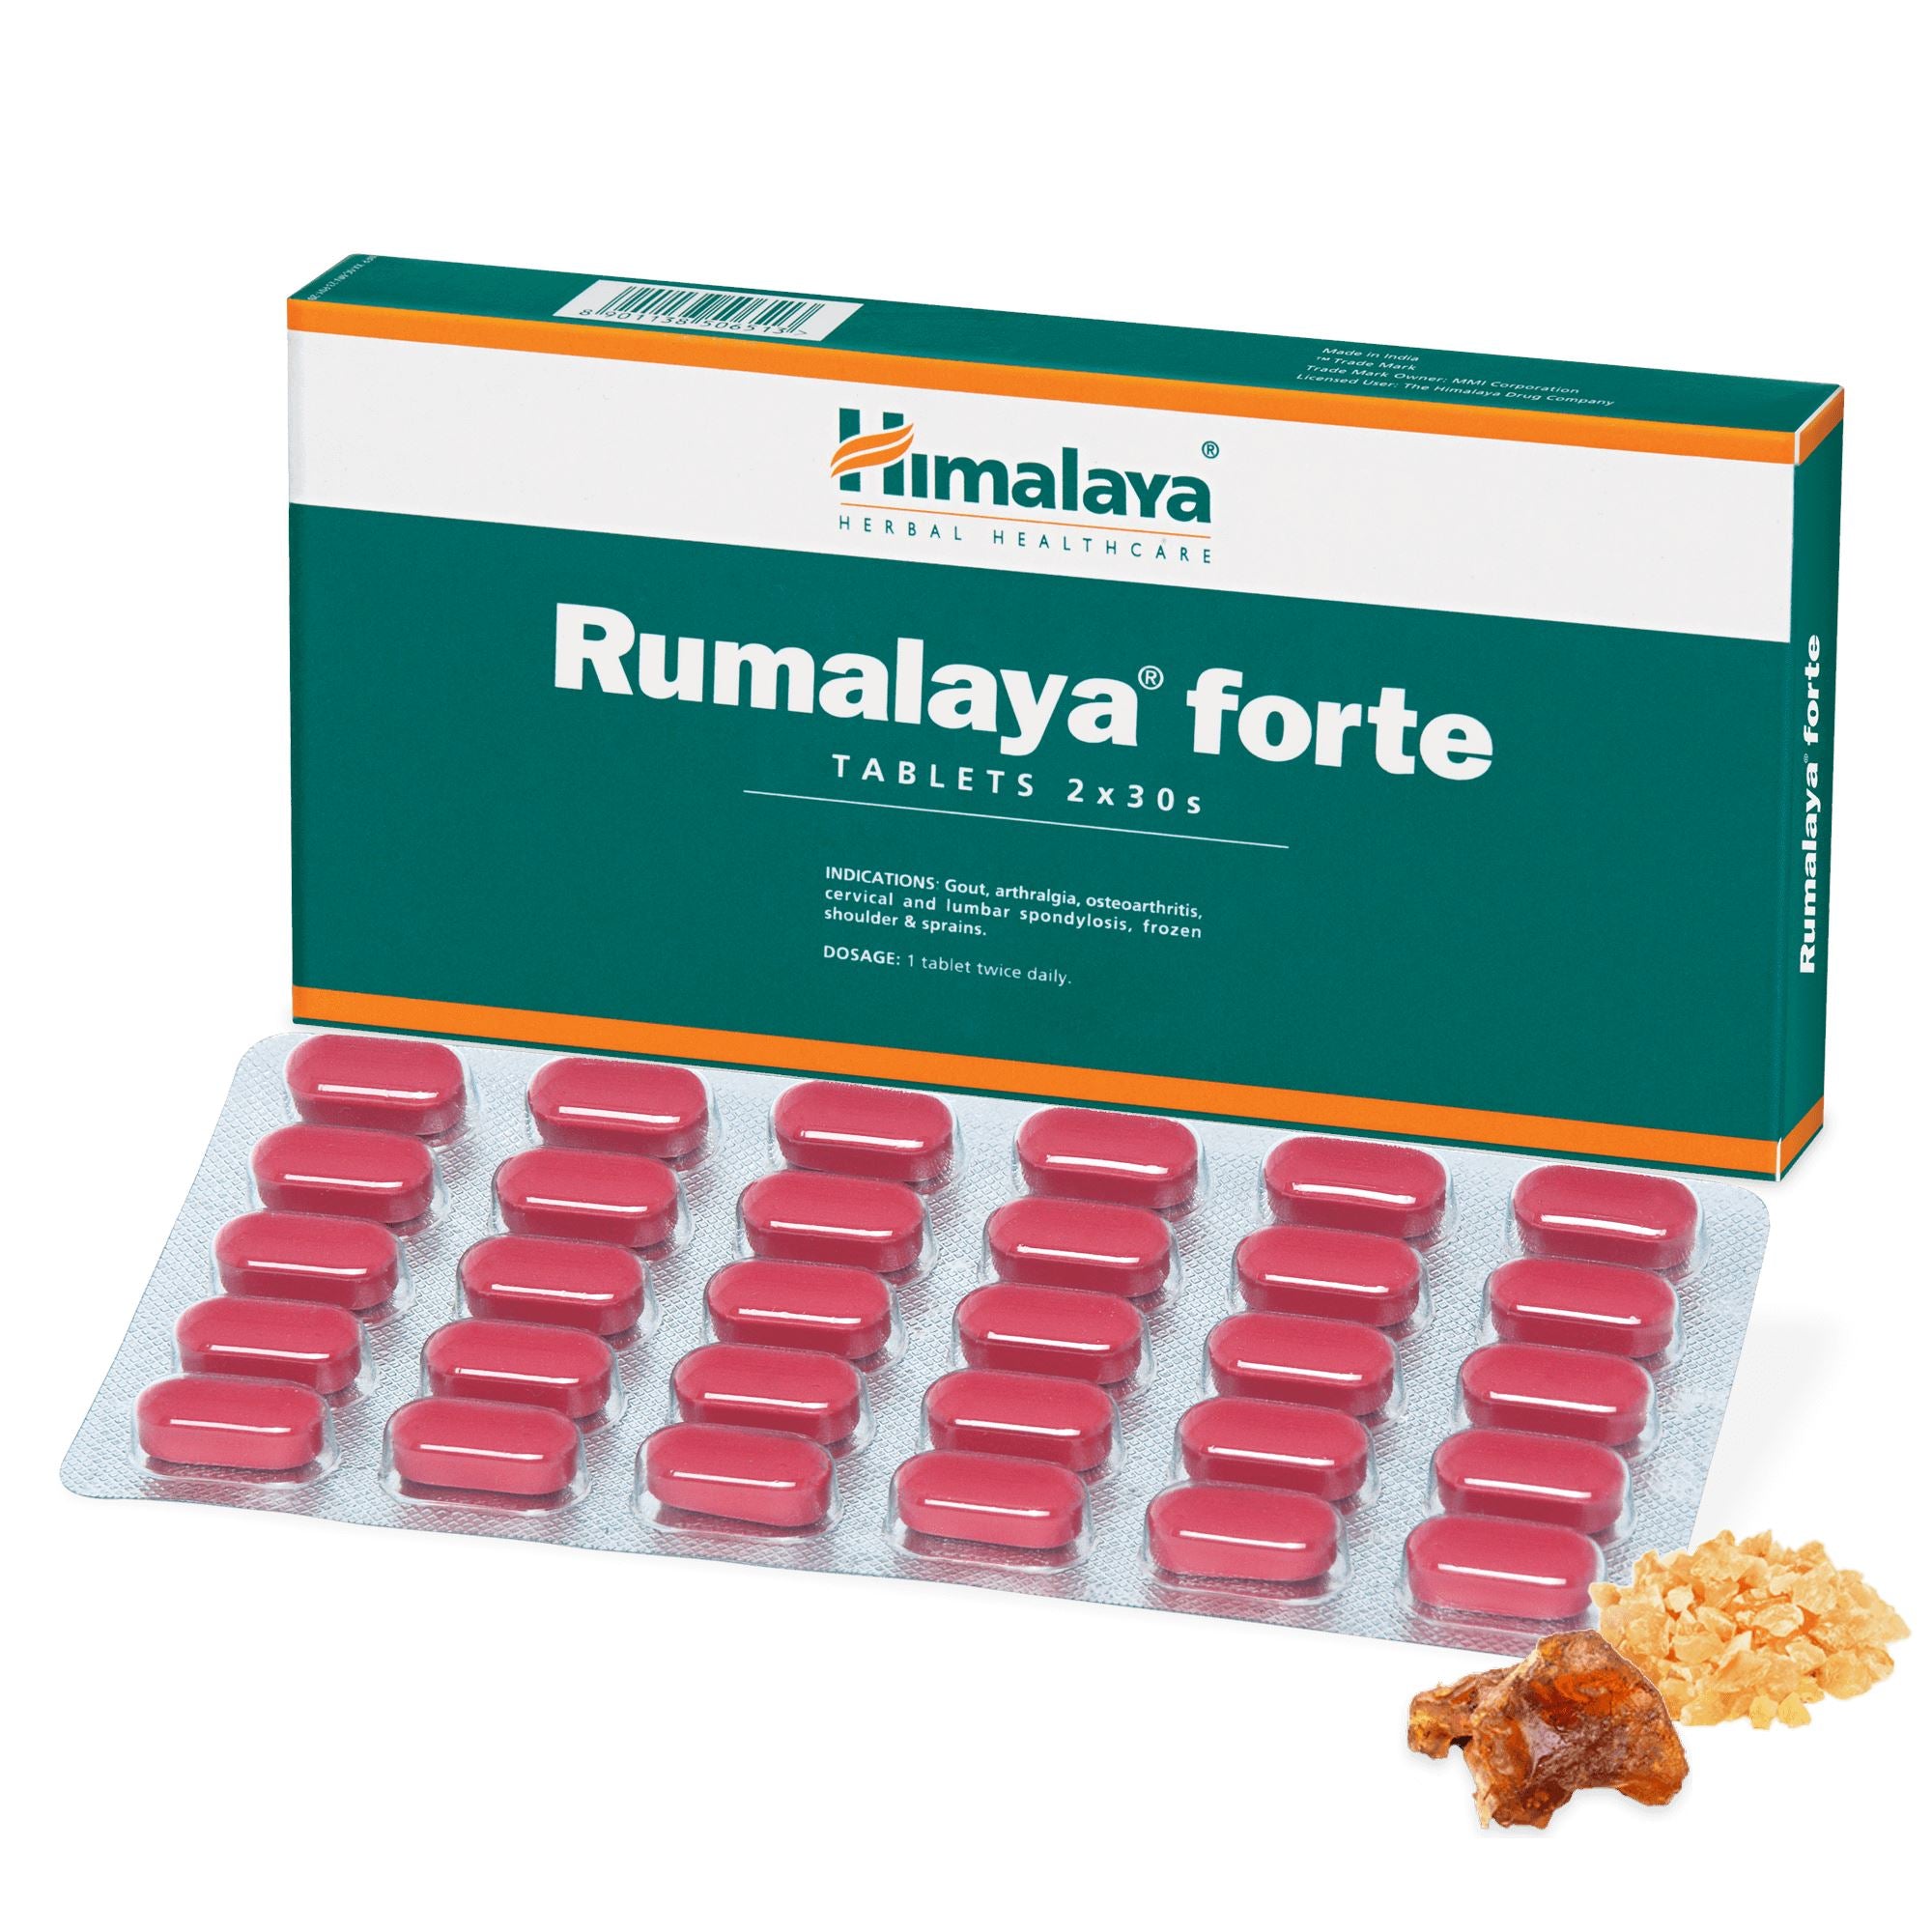 Himalaya Rumalaya forte - Treats arthritis, osteoarthritis, spondylitis, gout, and all joint pains